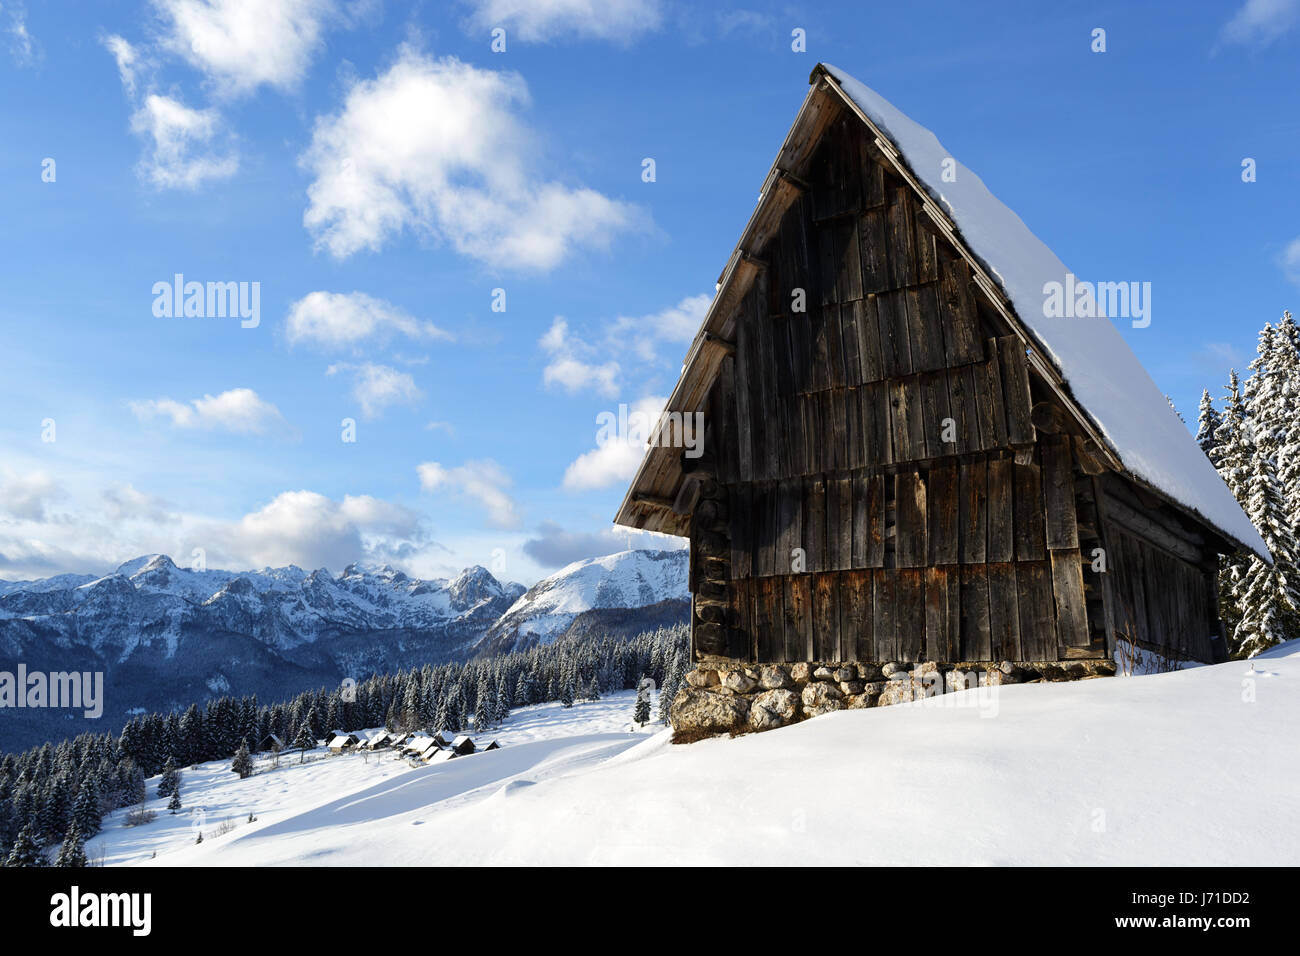 Mountain hut on the snowy meadow, Zajmniki, Pokljuka, Slovenia Stock Photo